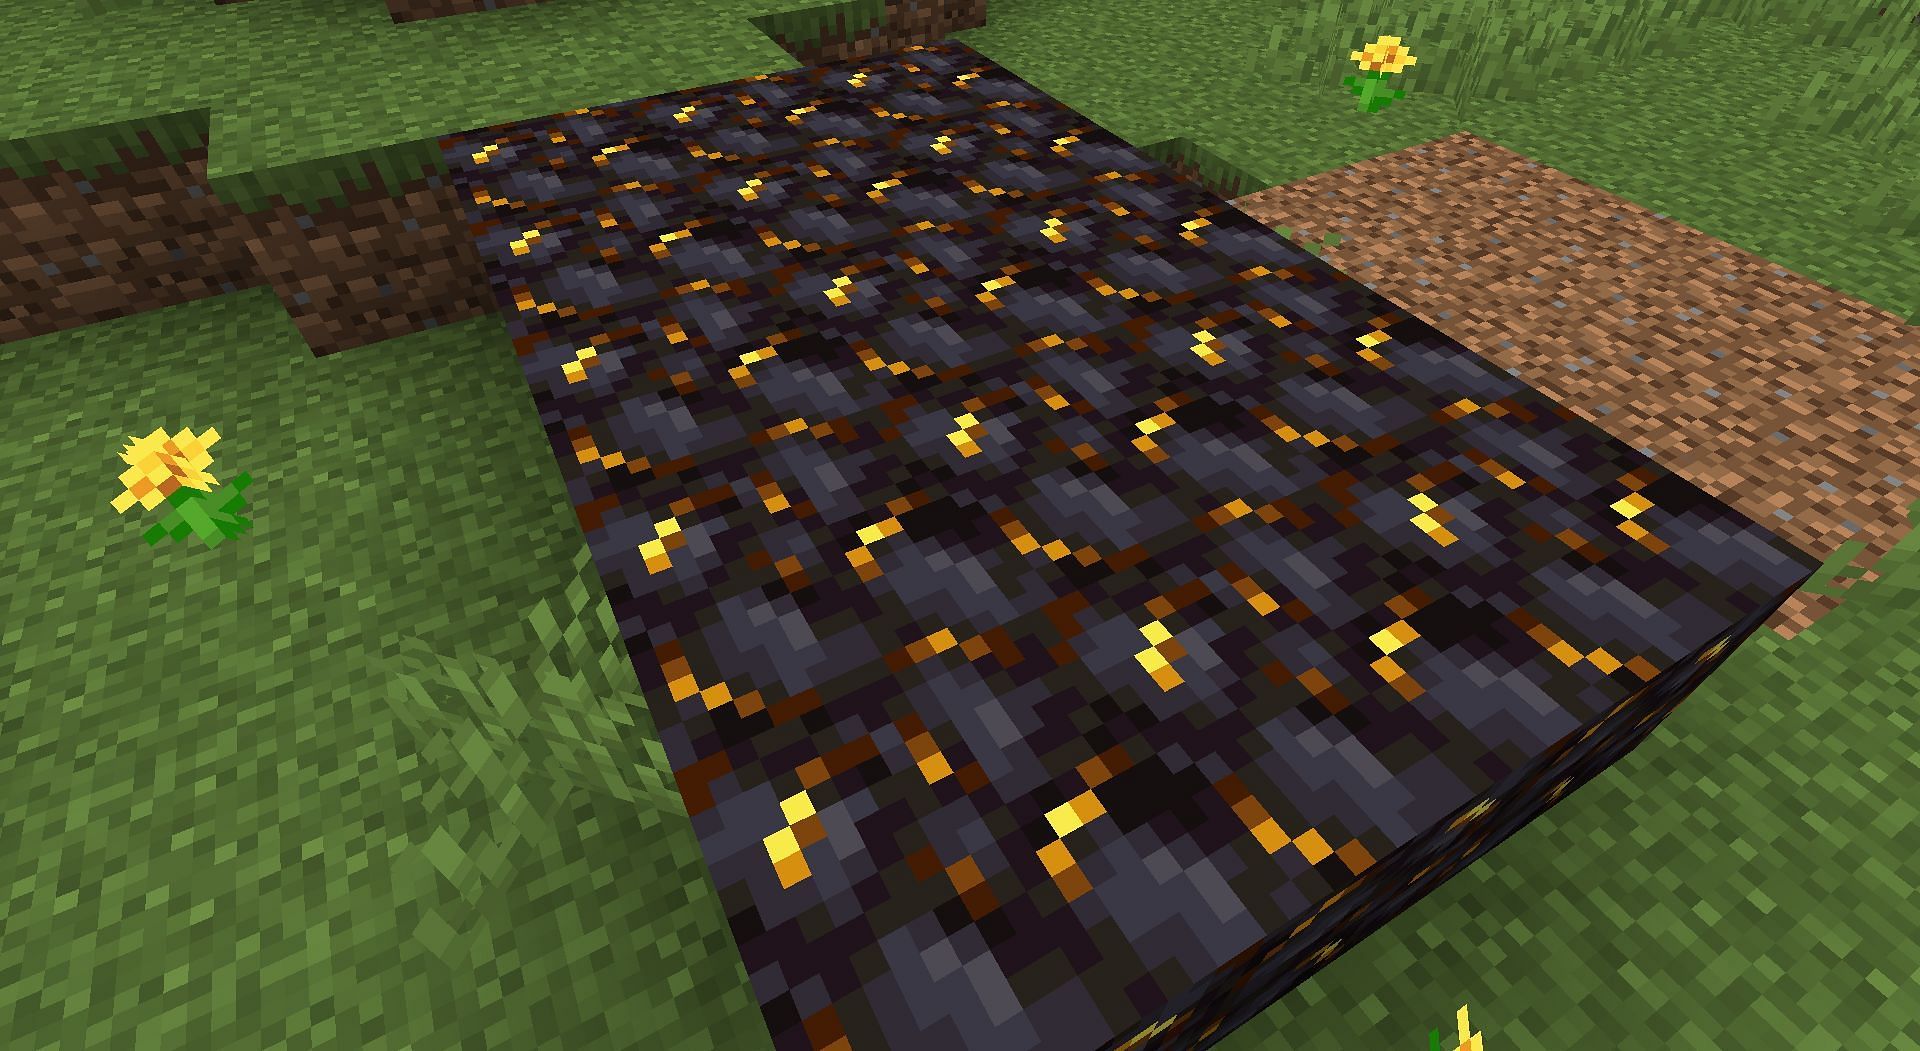 Gilded blackstone (Image via Minecraft)